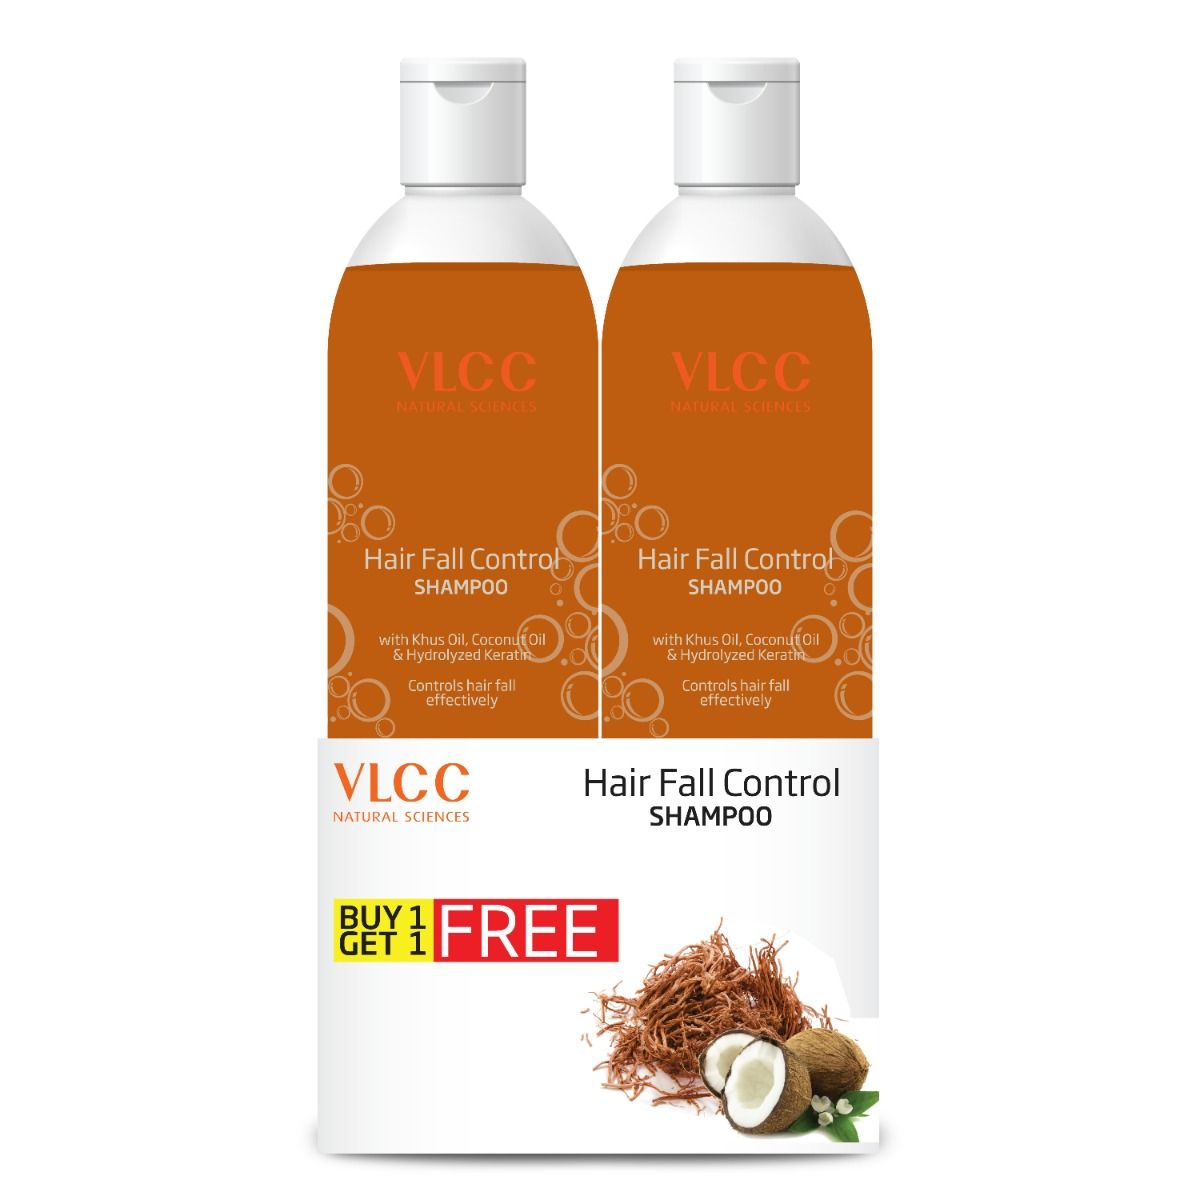 Women Hairfall 350ml VLCC Hair Fall Control Shampoo For Bottle Packaging  Size 350 Ml at Rs 295piece in Mumbai